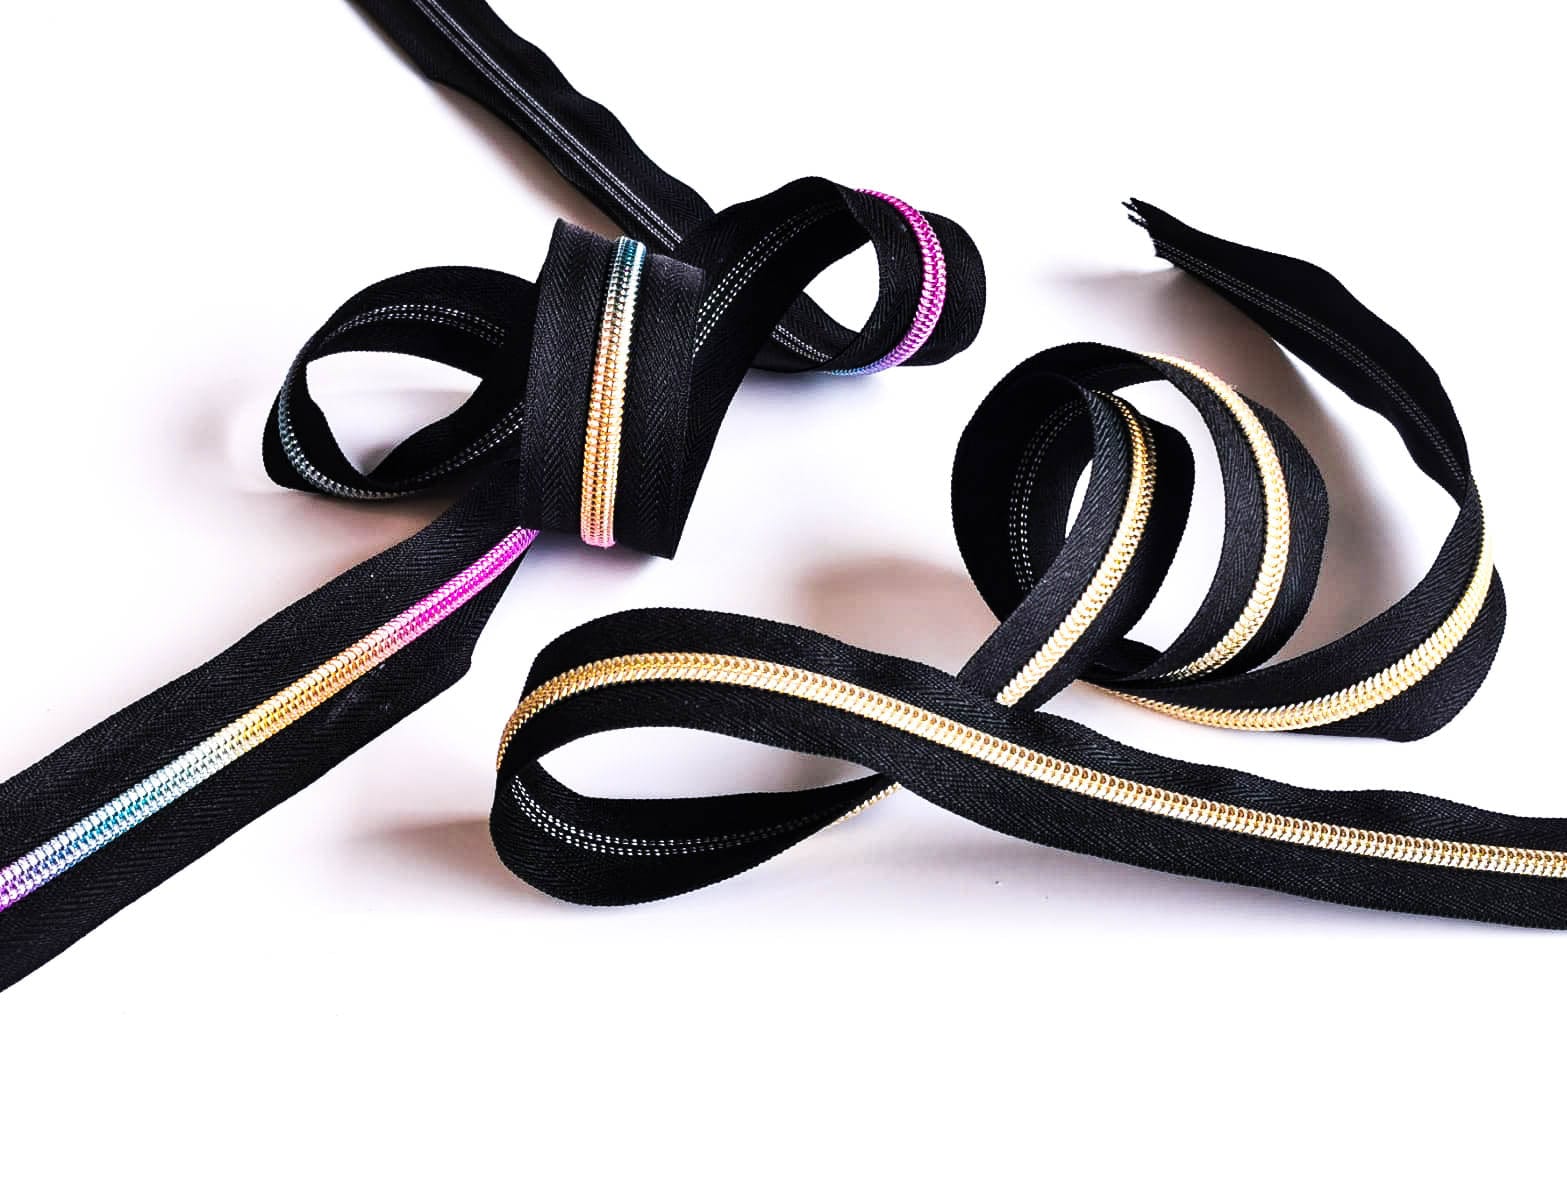 Zipper by the Yard (metre). 2.5m of #3 Zipper tape with 10 Zipper Sliders/Pullers - Kiwi Bagineers